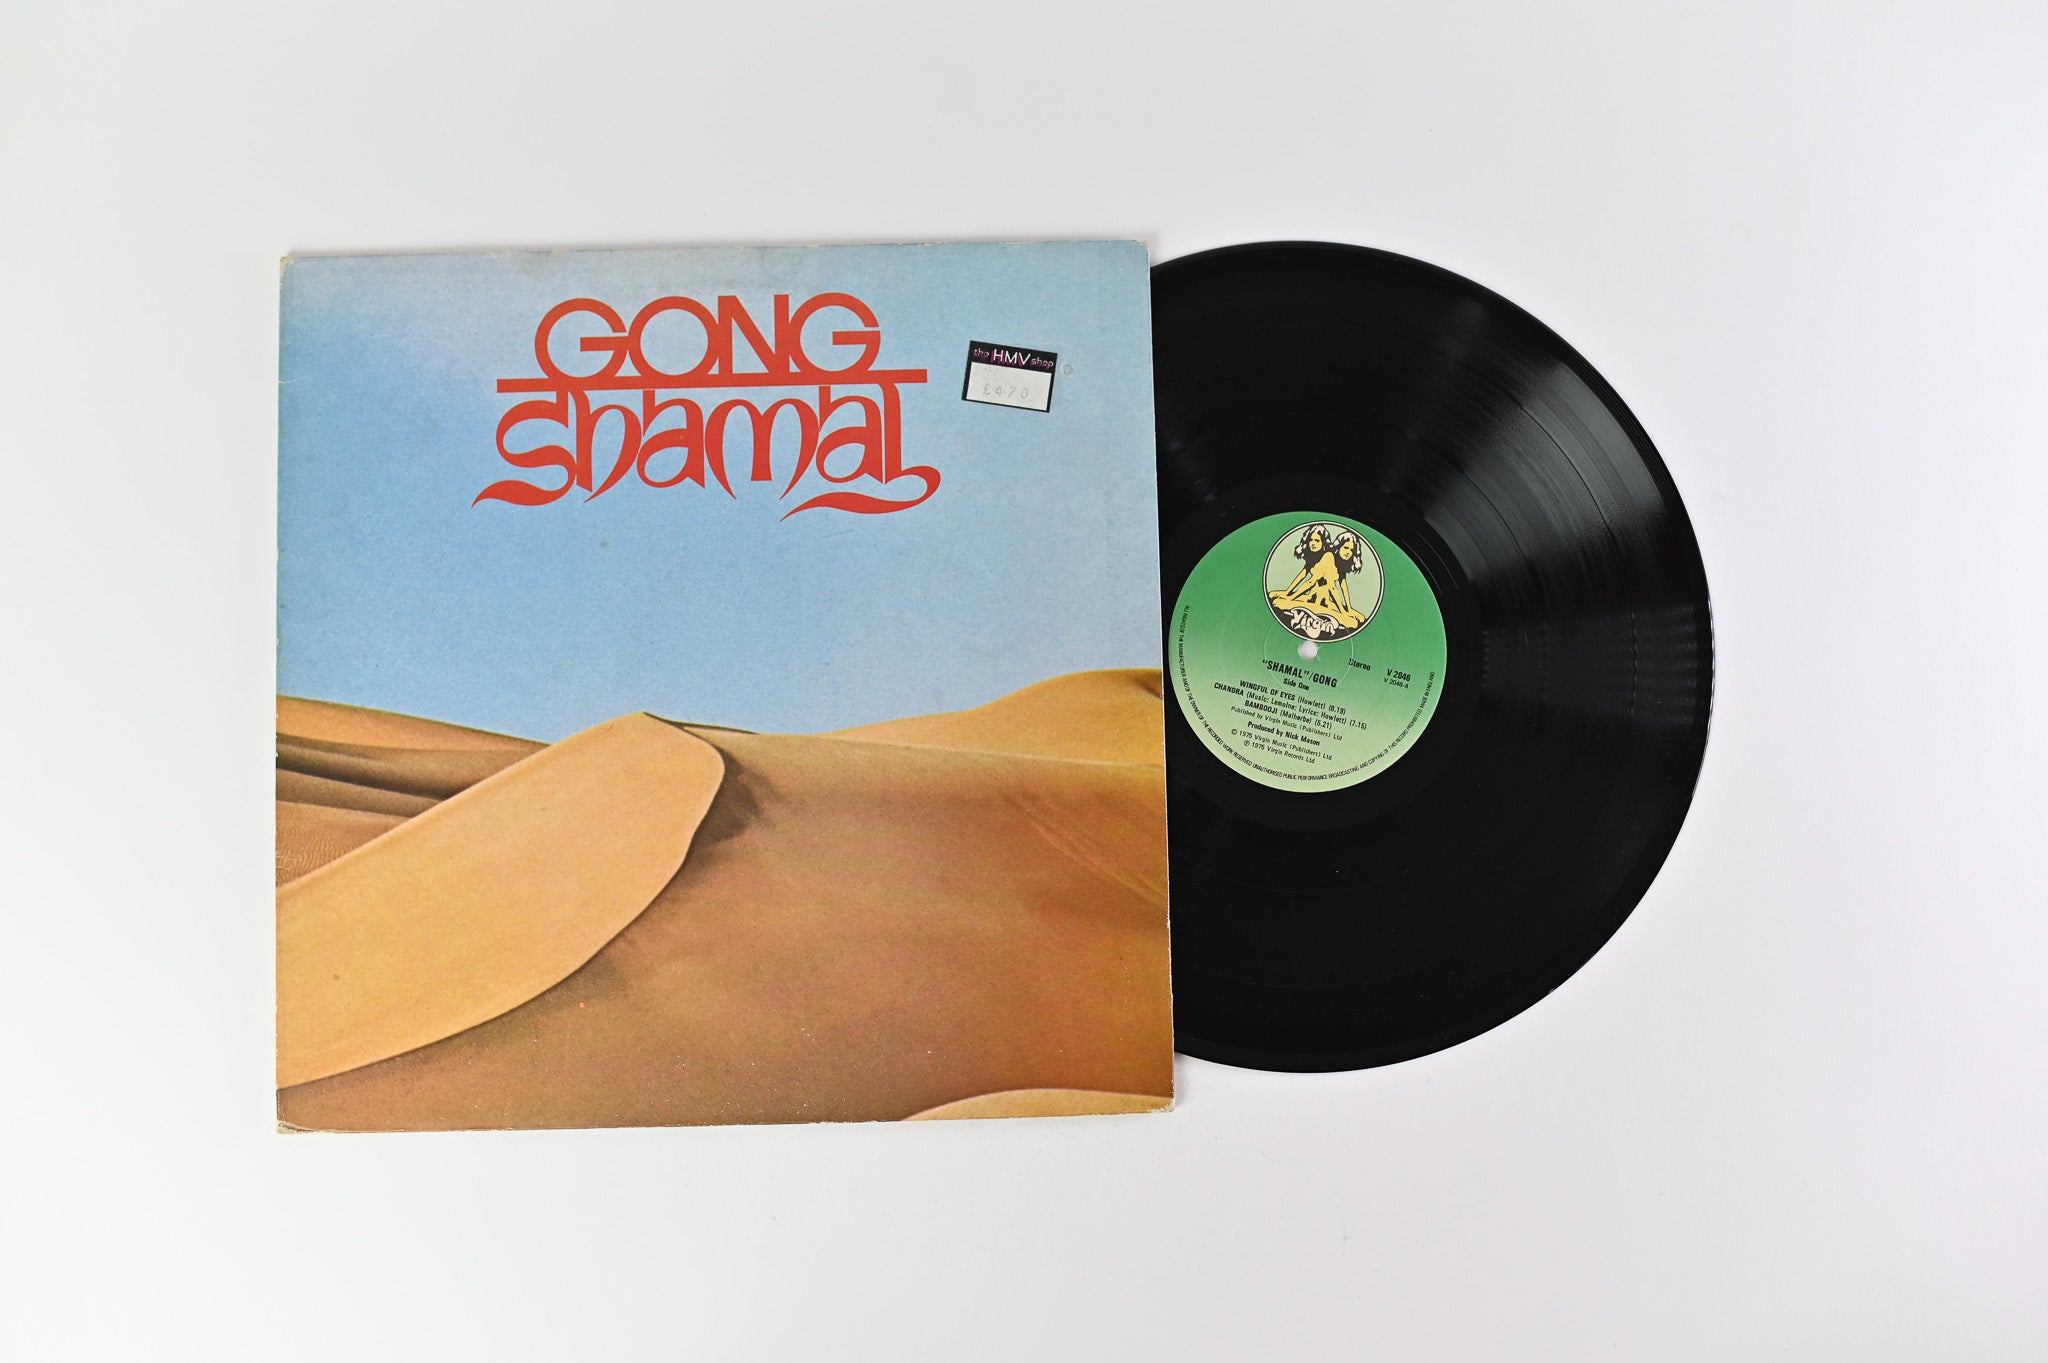 Gong - Shamal on Virgin - UK pressing